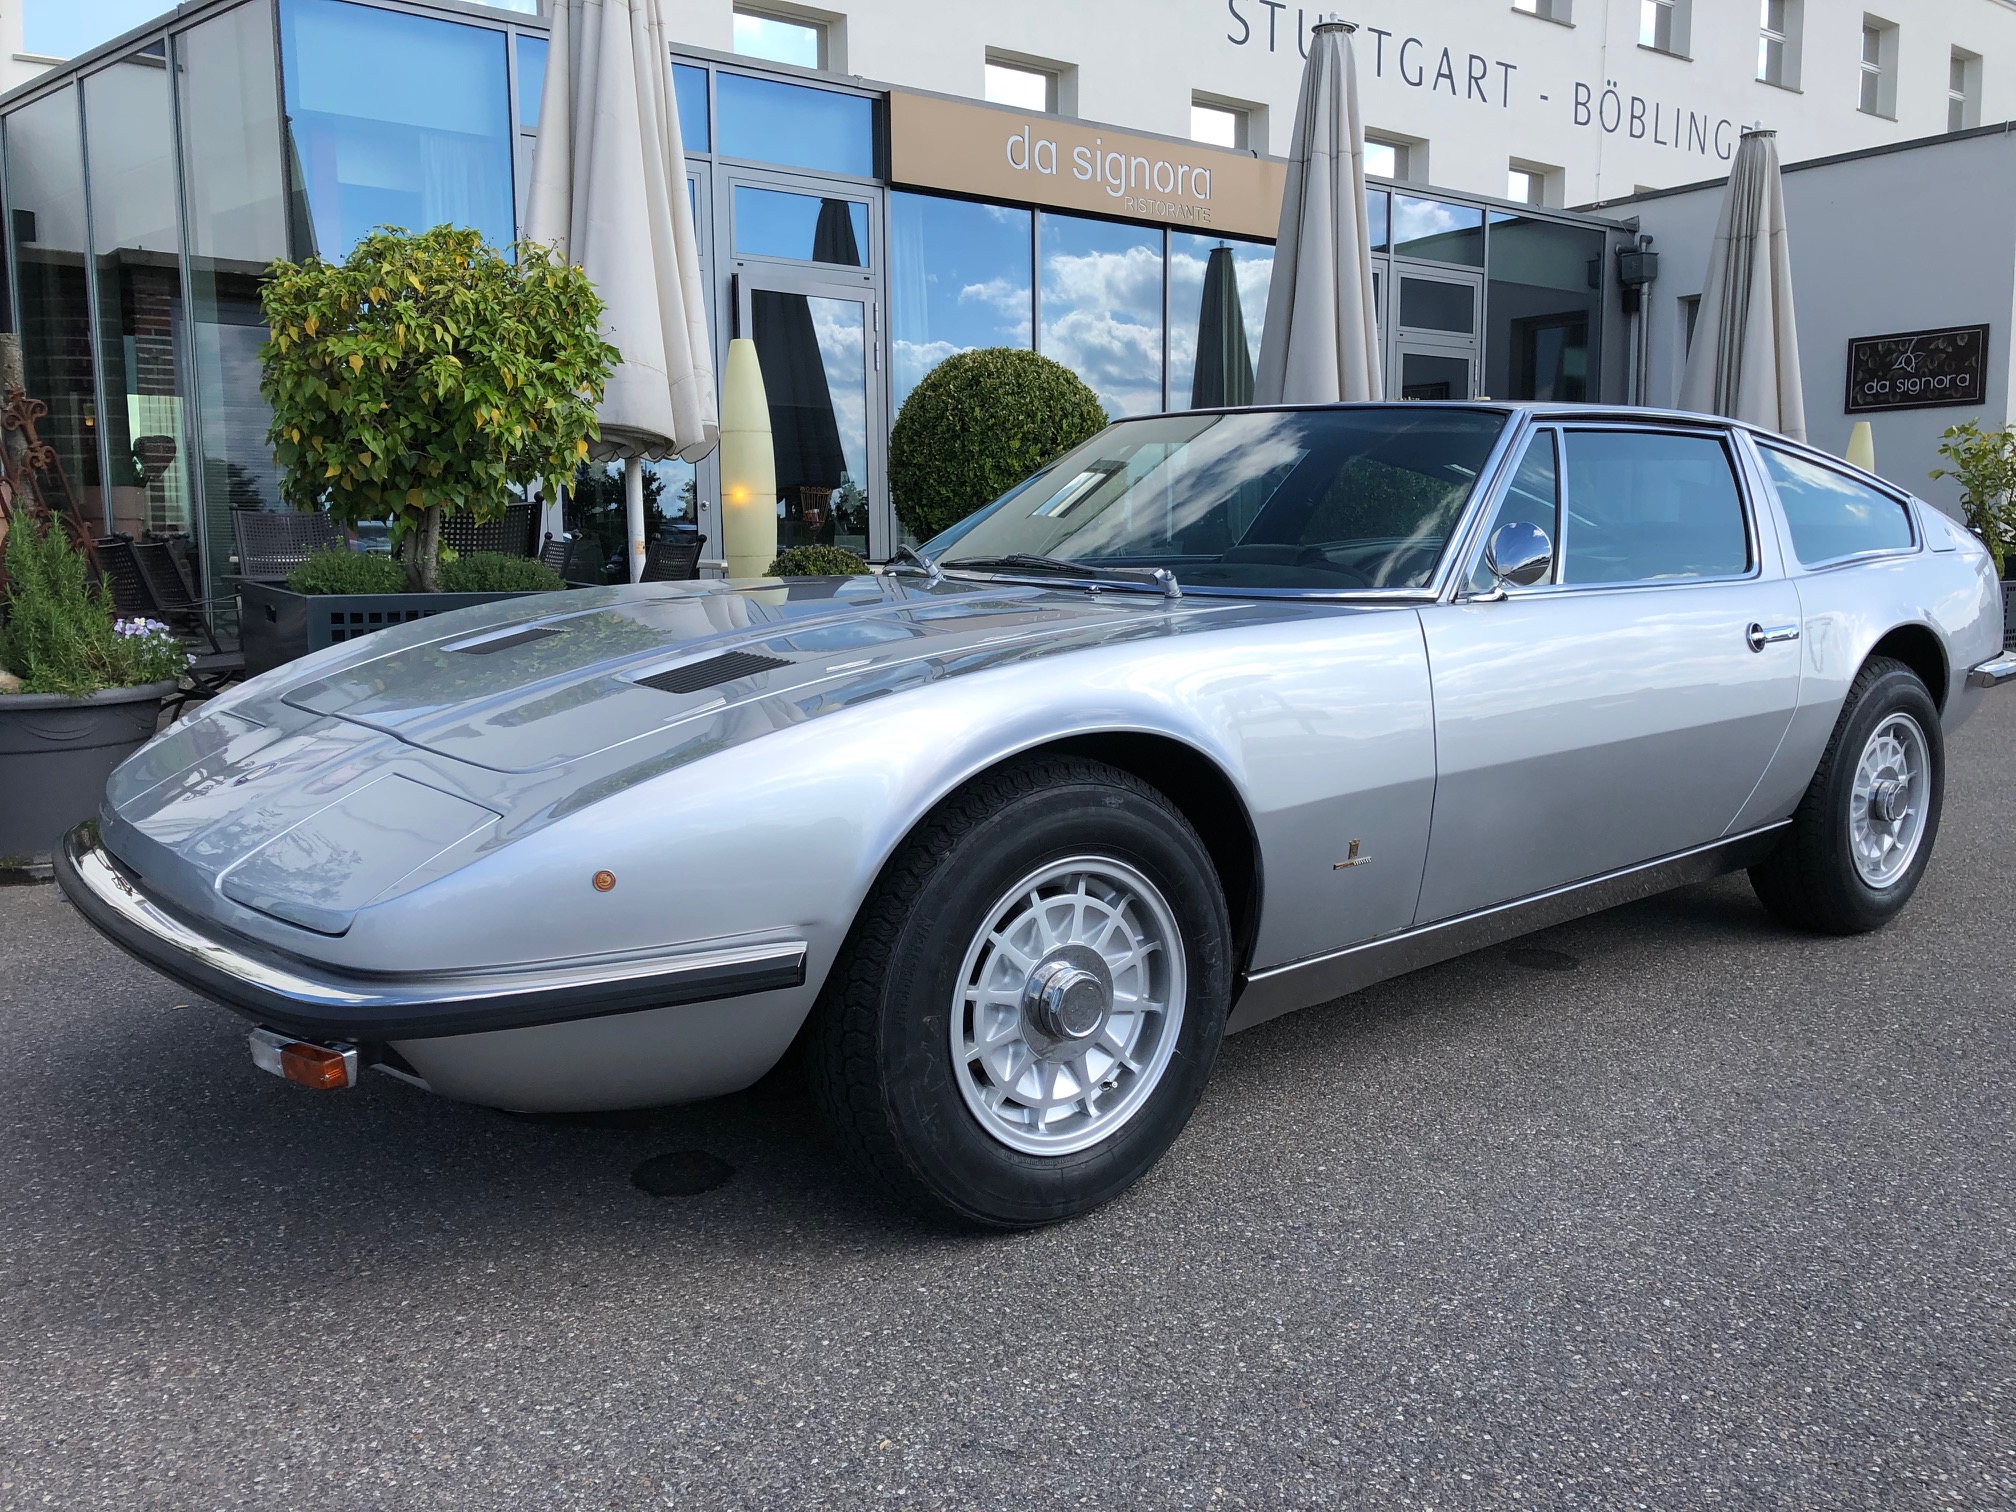 1973 Maserati Indy 4900 | Biposto GmbH | Classic Cars in ...